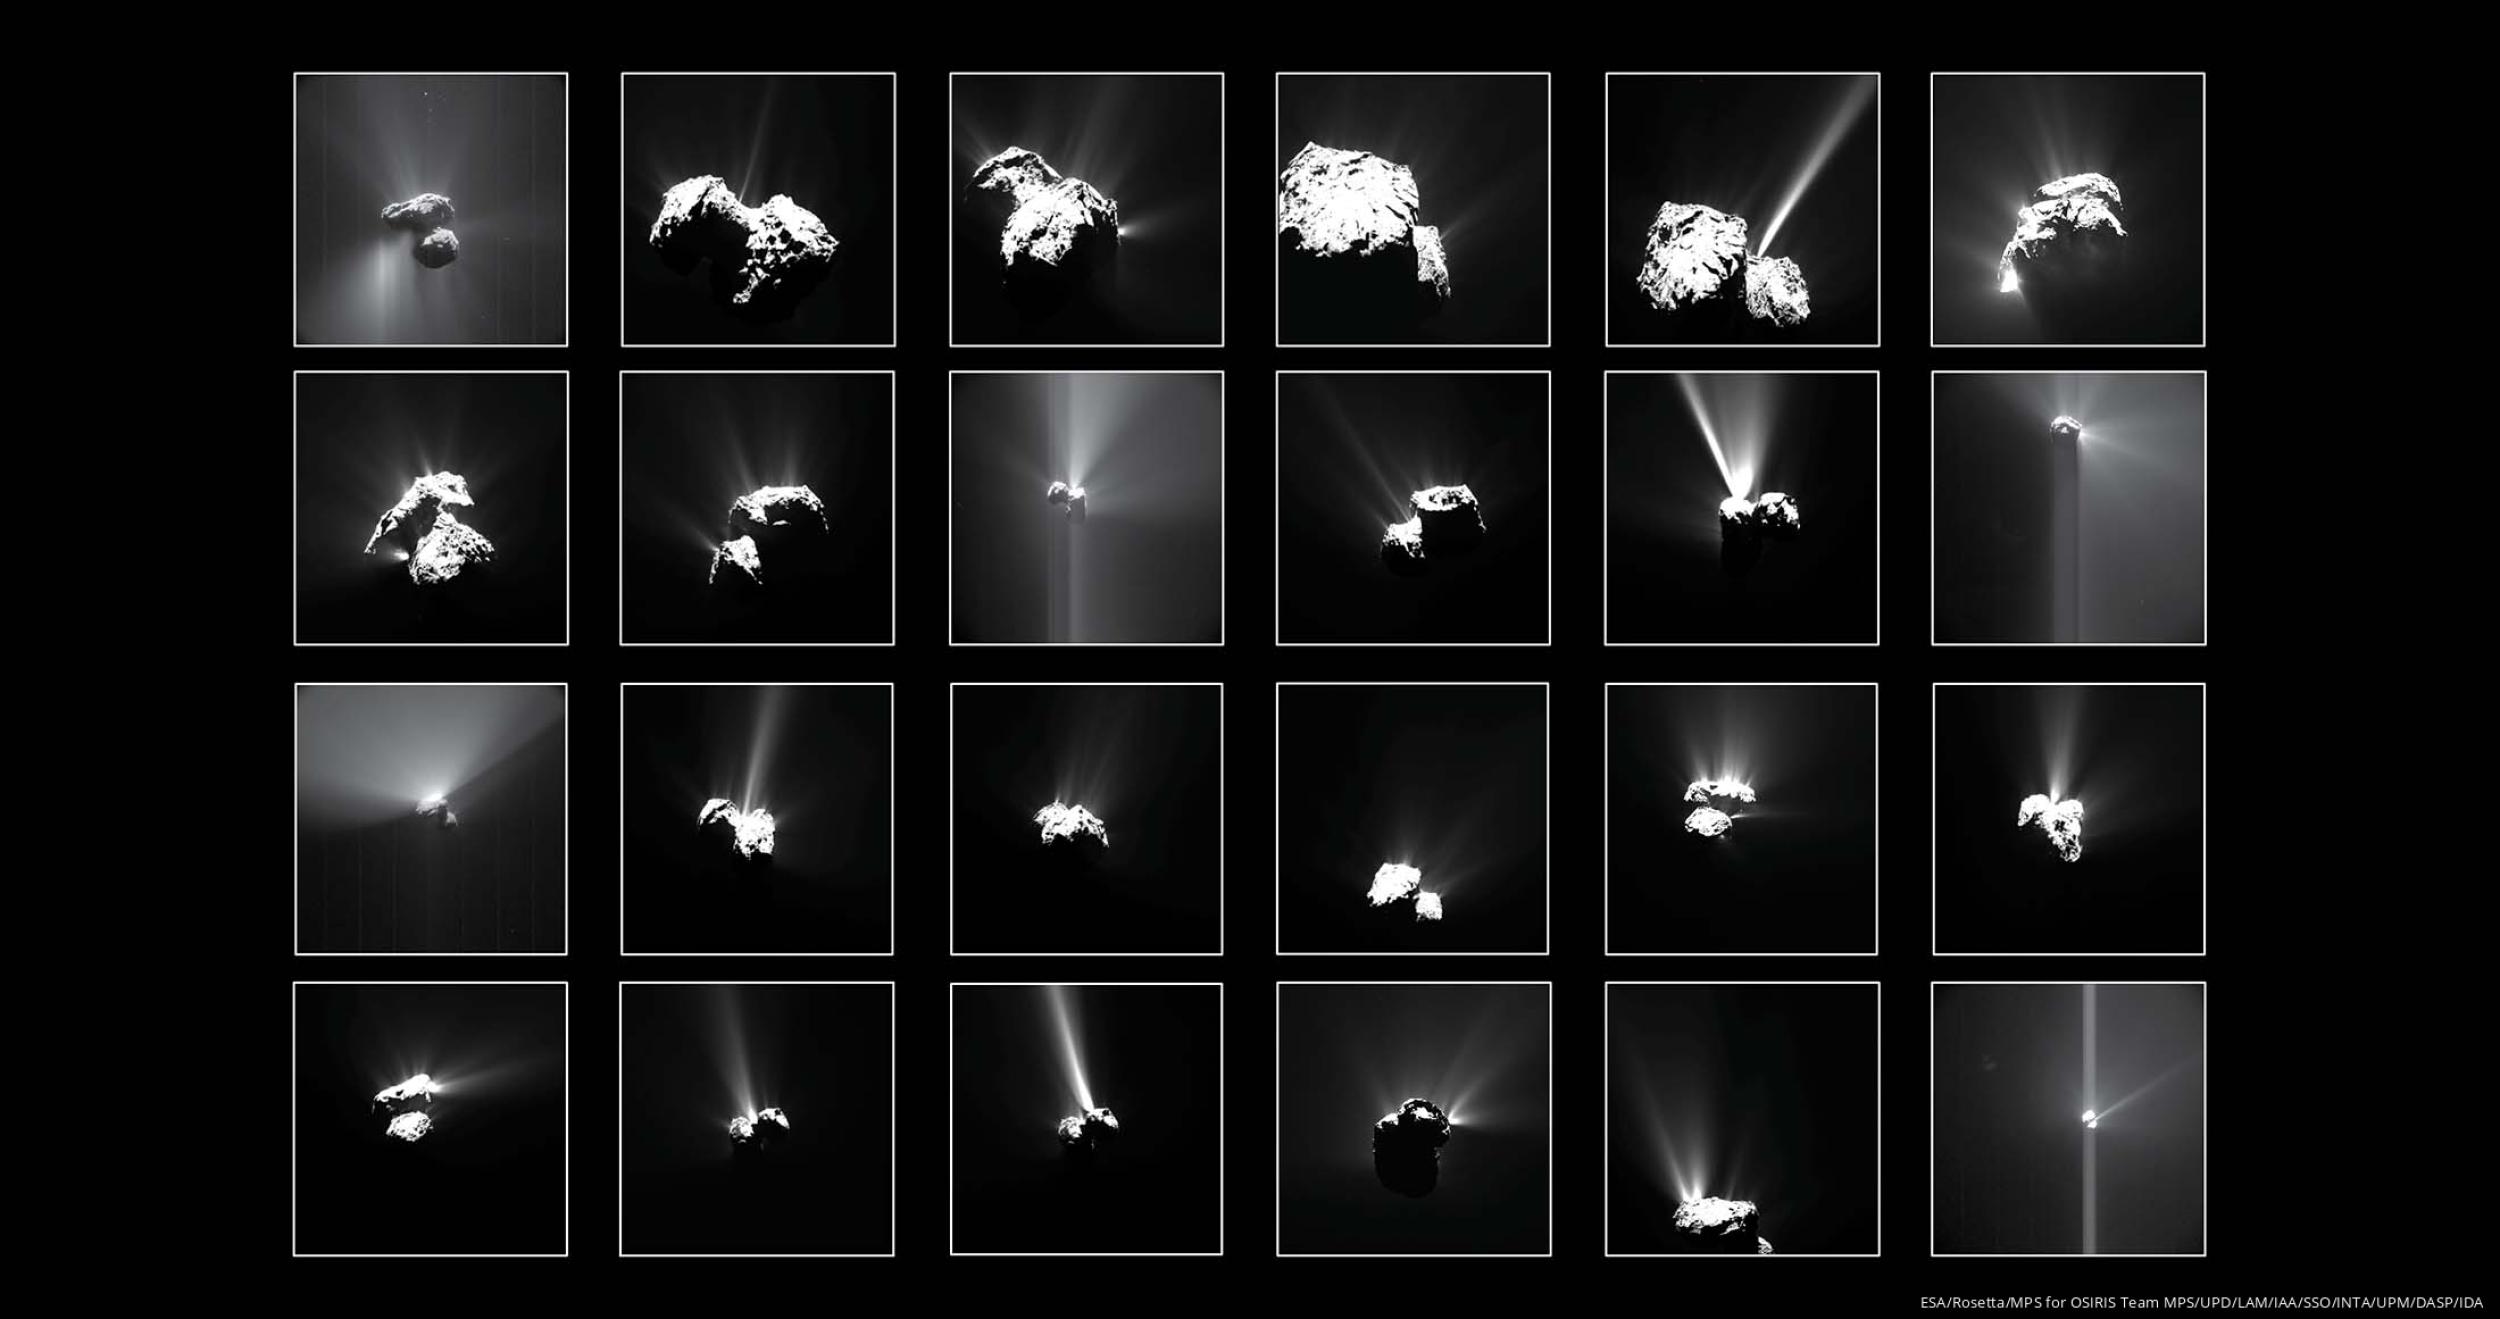 ESA/Rosetta/MPS for OSIRIS Team MPS/UPD/LAM/IAA/SSO/INTA/UPM/DASP/IDA